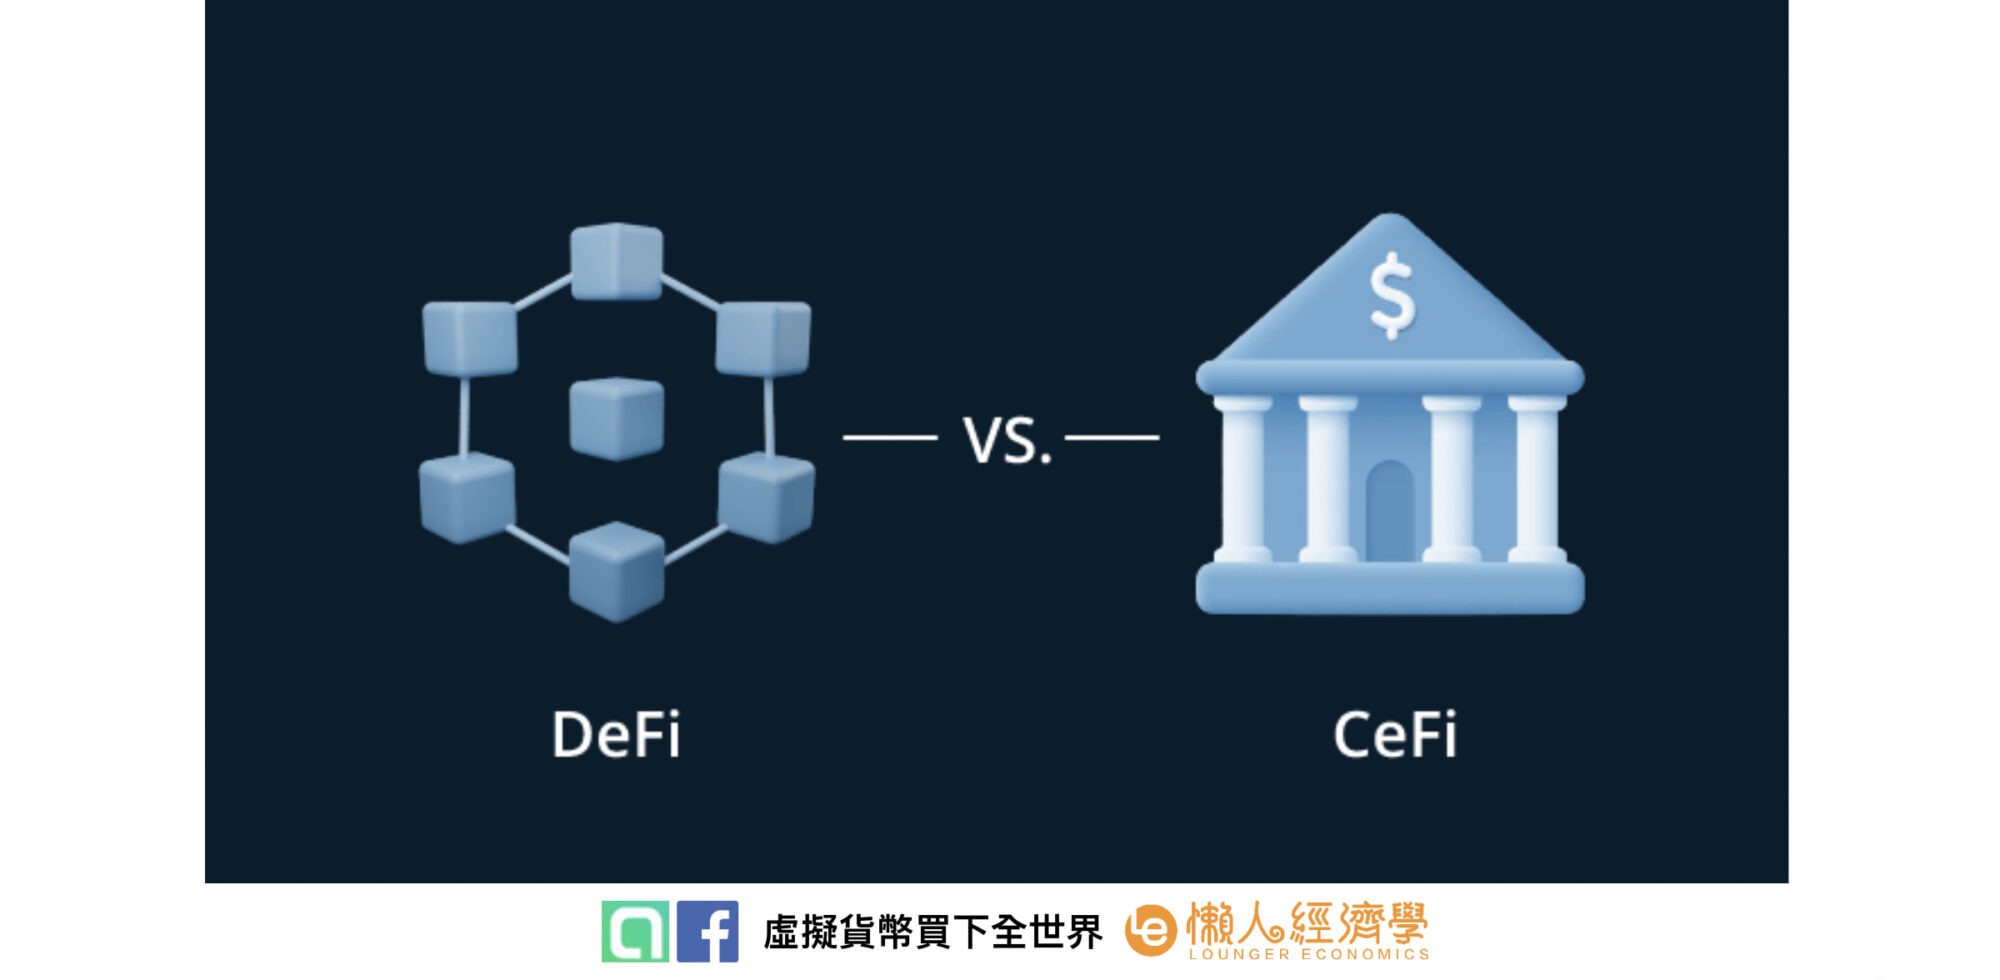 DeFi 去中心化金融與 CeFi 傳統金融中心的優勢劣勢